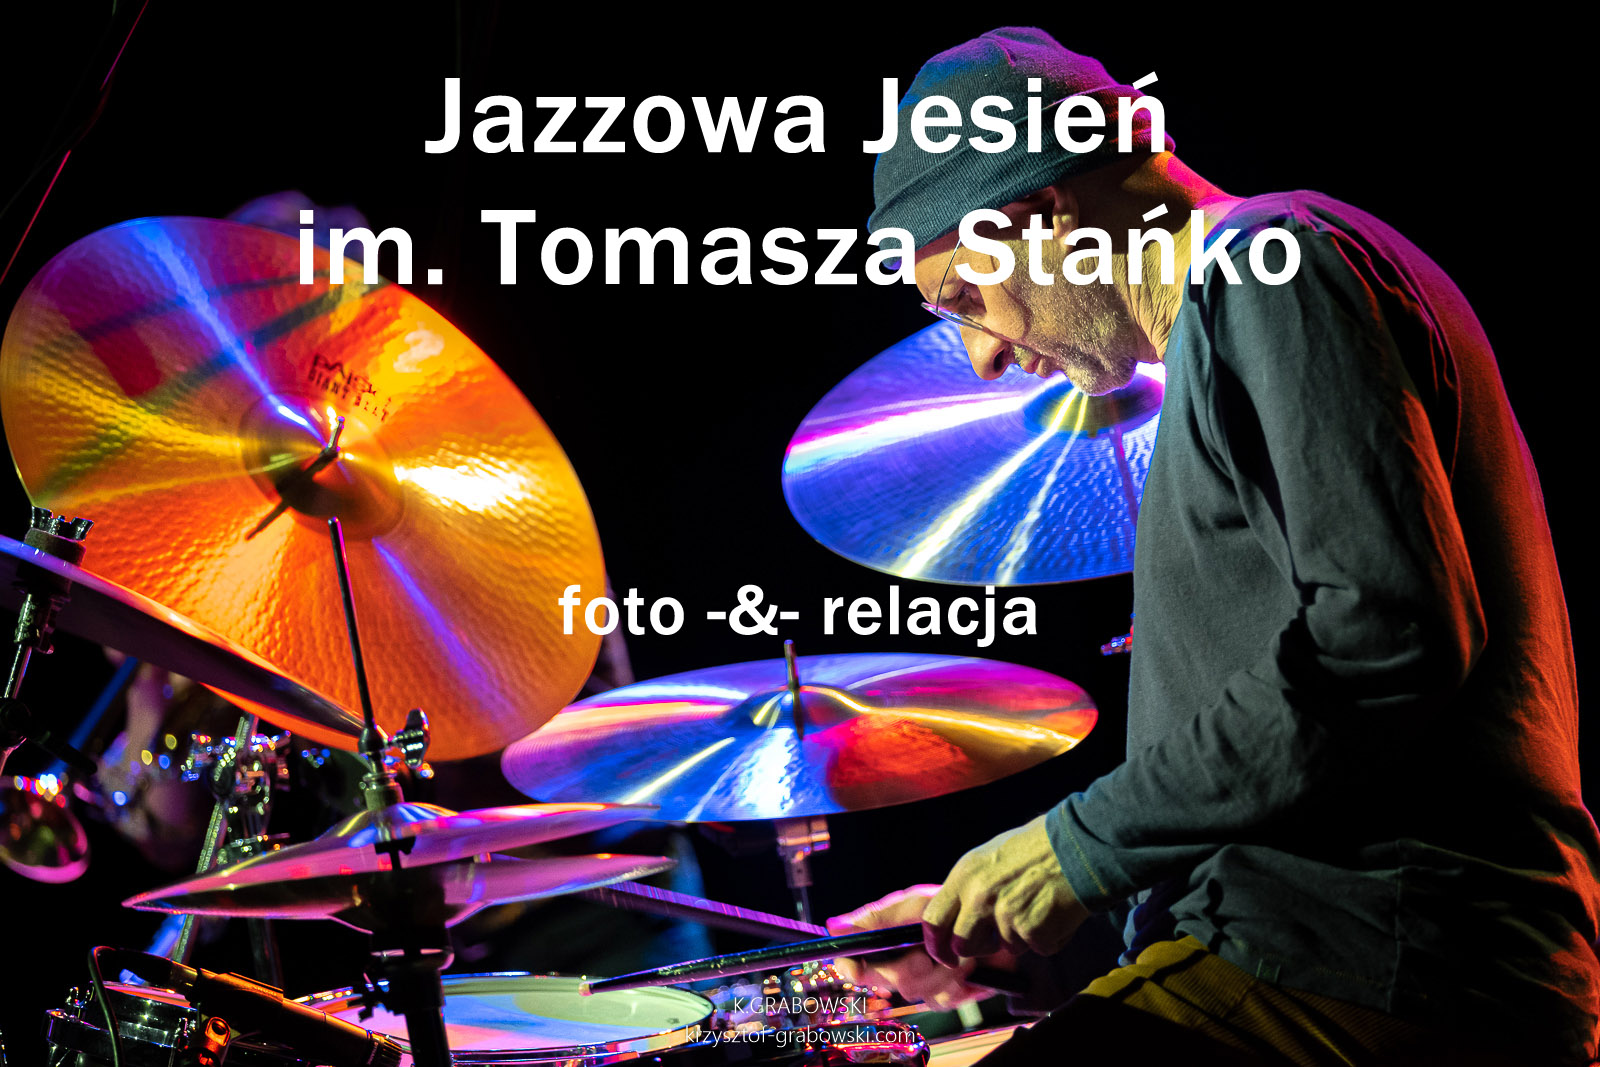 jazzowa-jesien_jakob-bro__fot-kgrabowski__06a.jpg